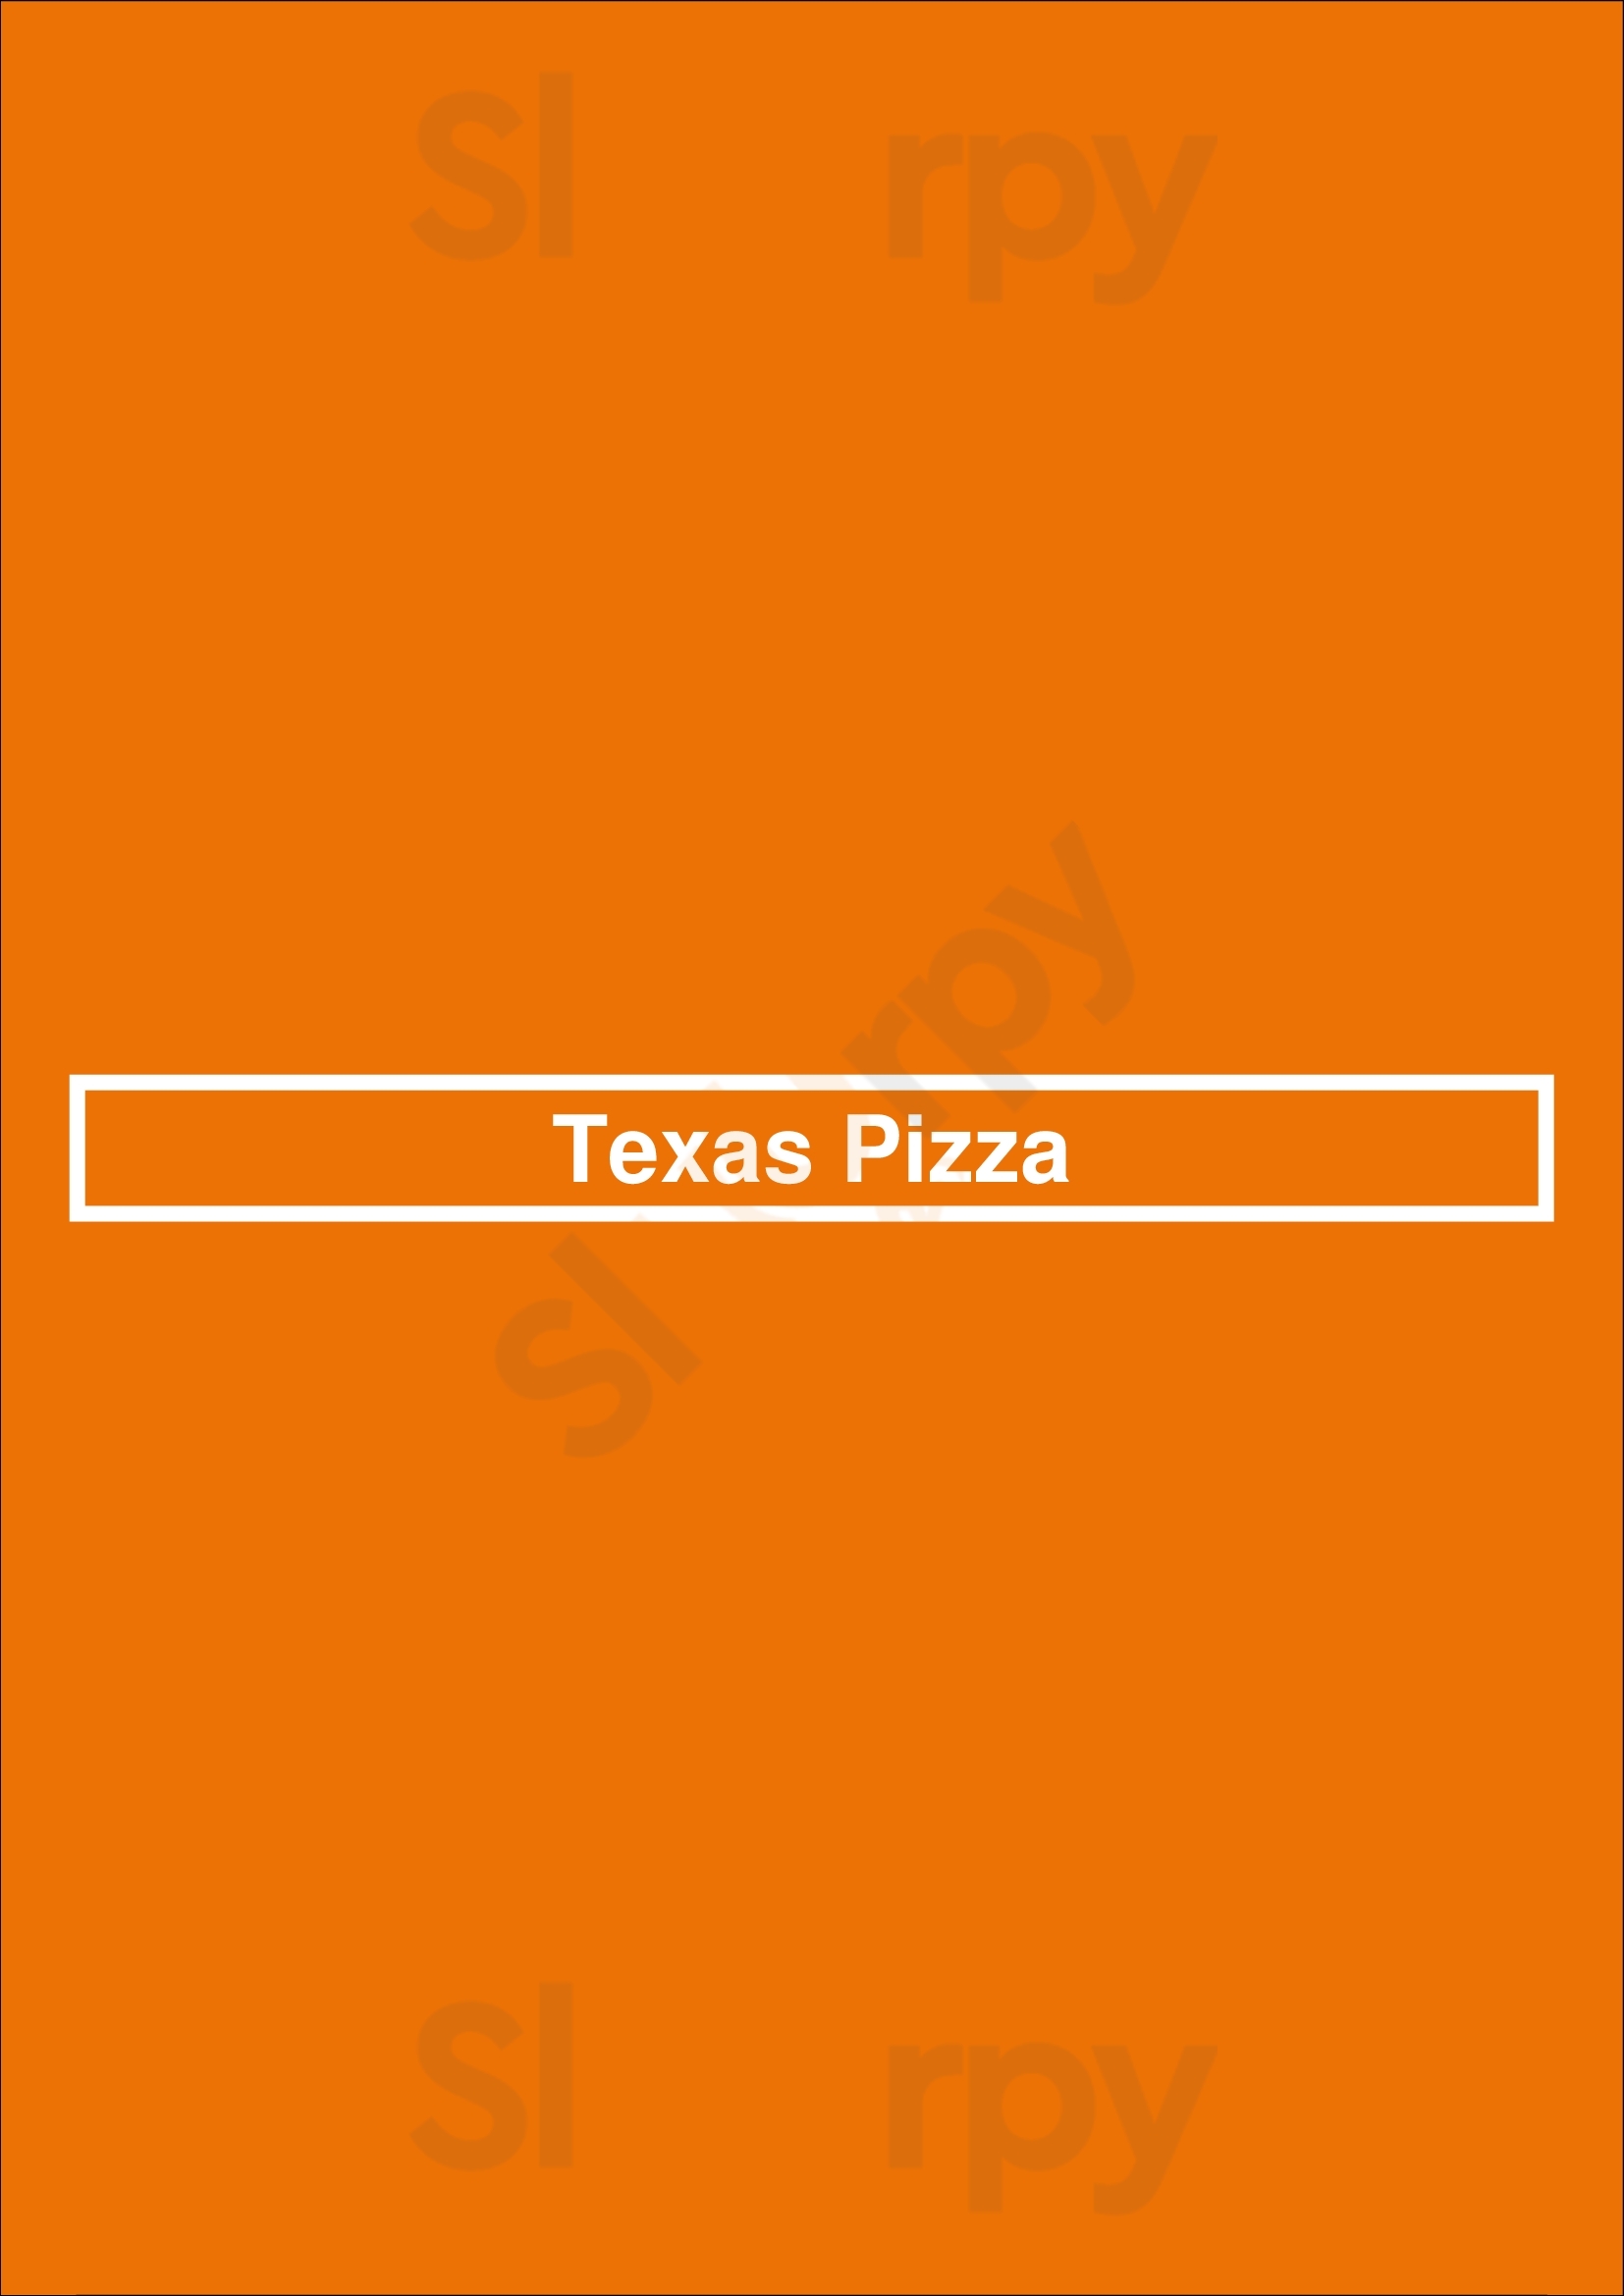 Texas Pizza Houston Menu - 1